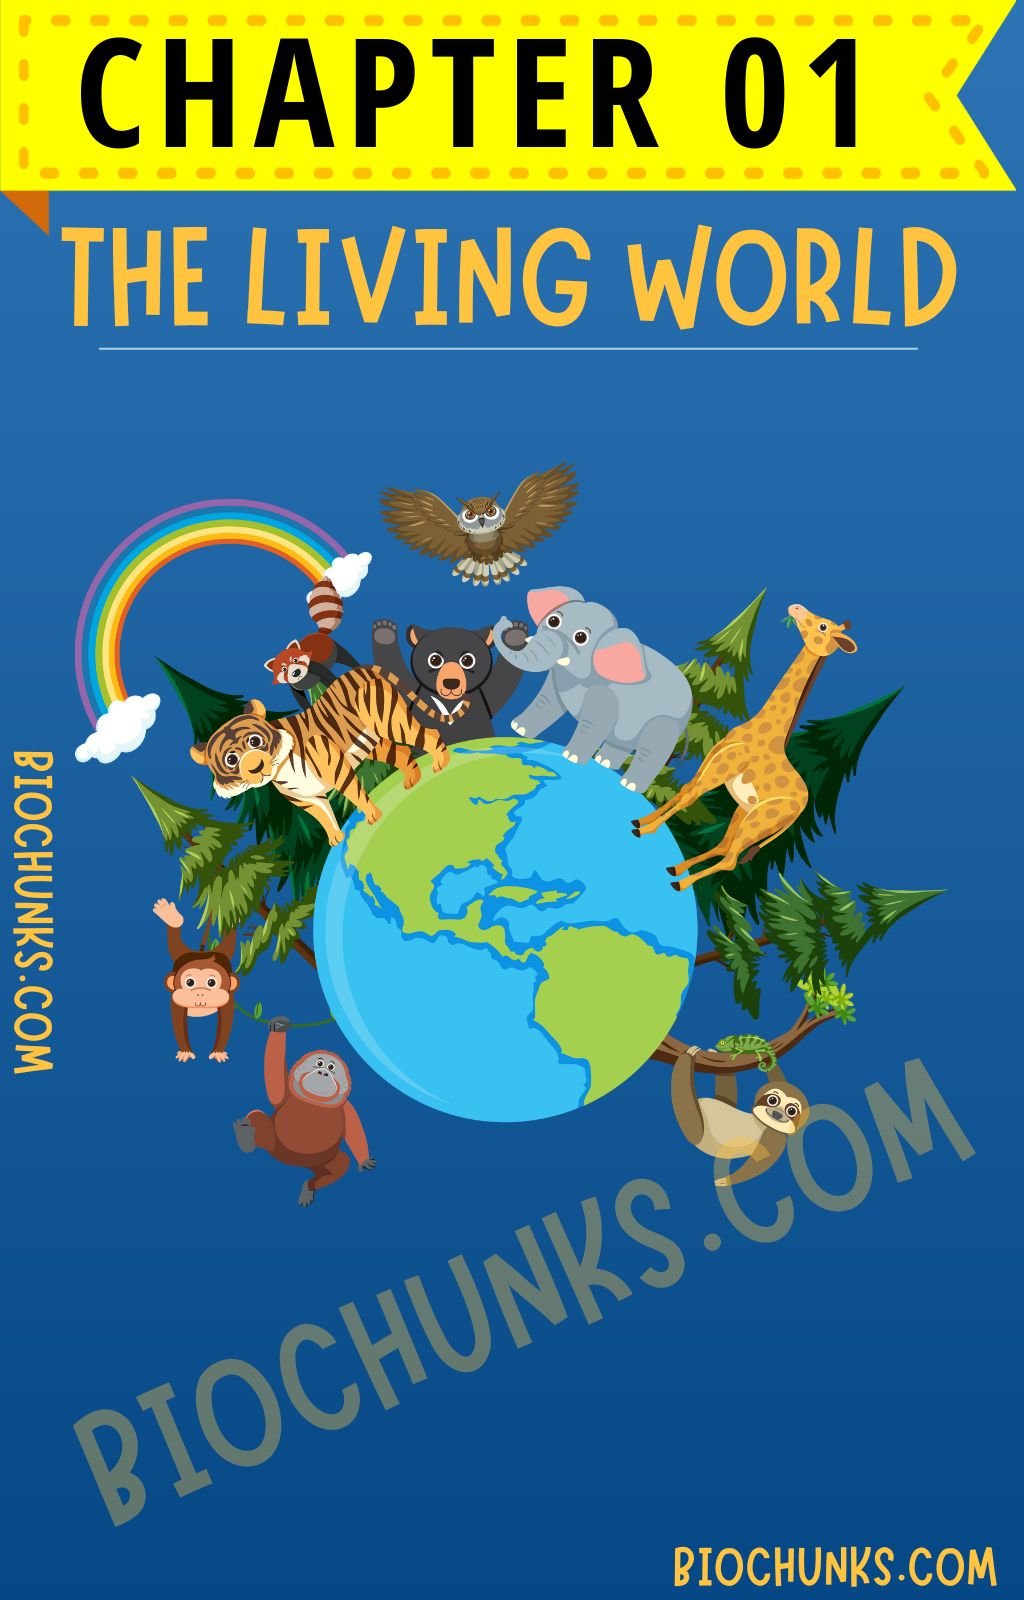 The Living World Chapter 01 Class 11th biochunks.com